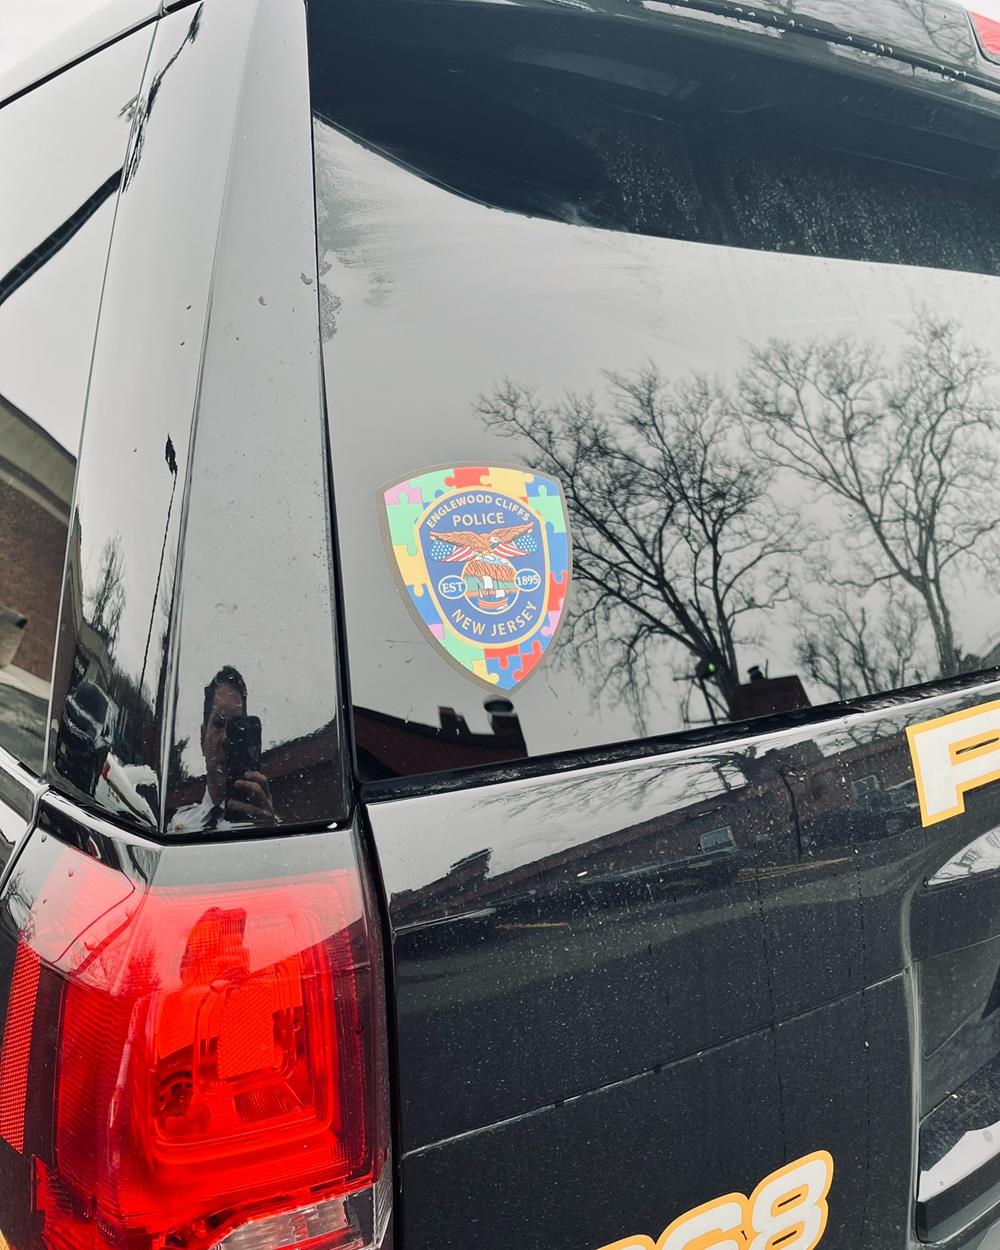 a police sticker on a car